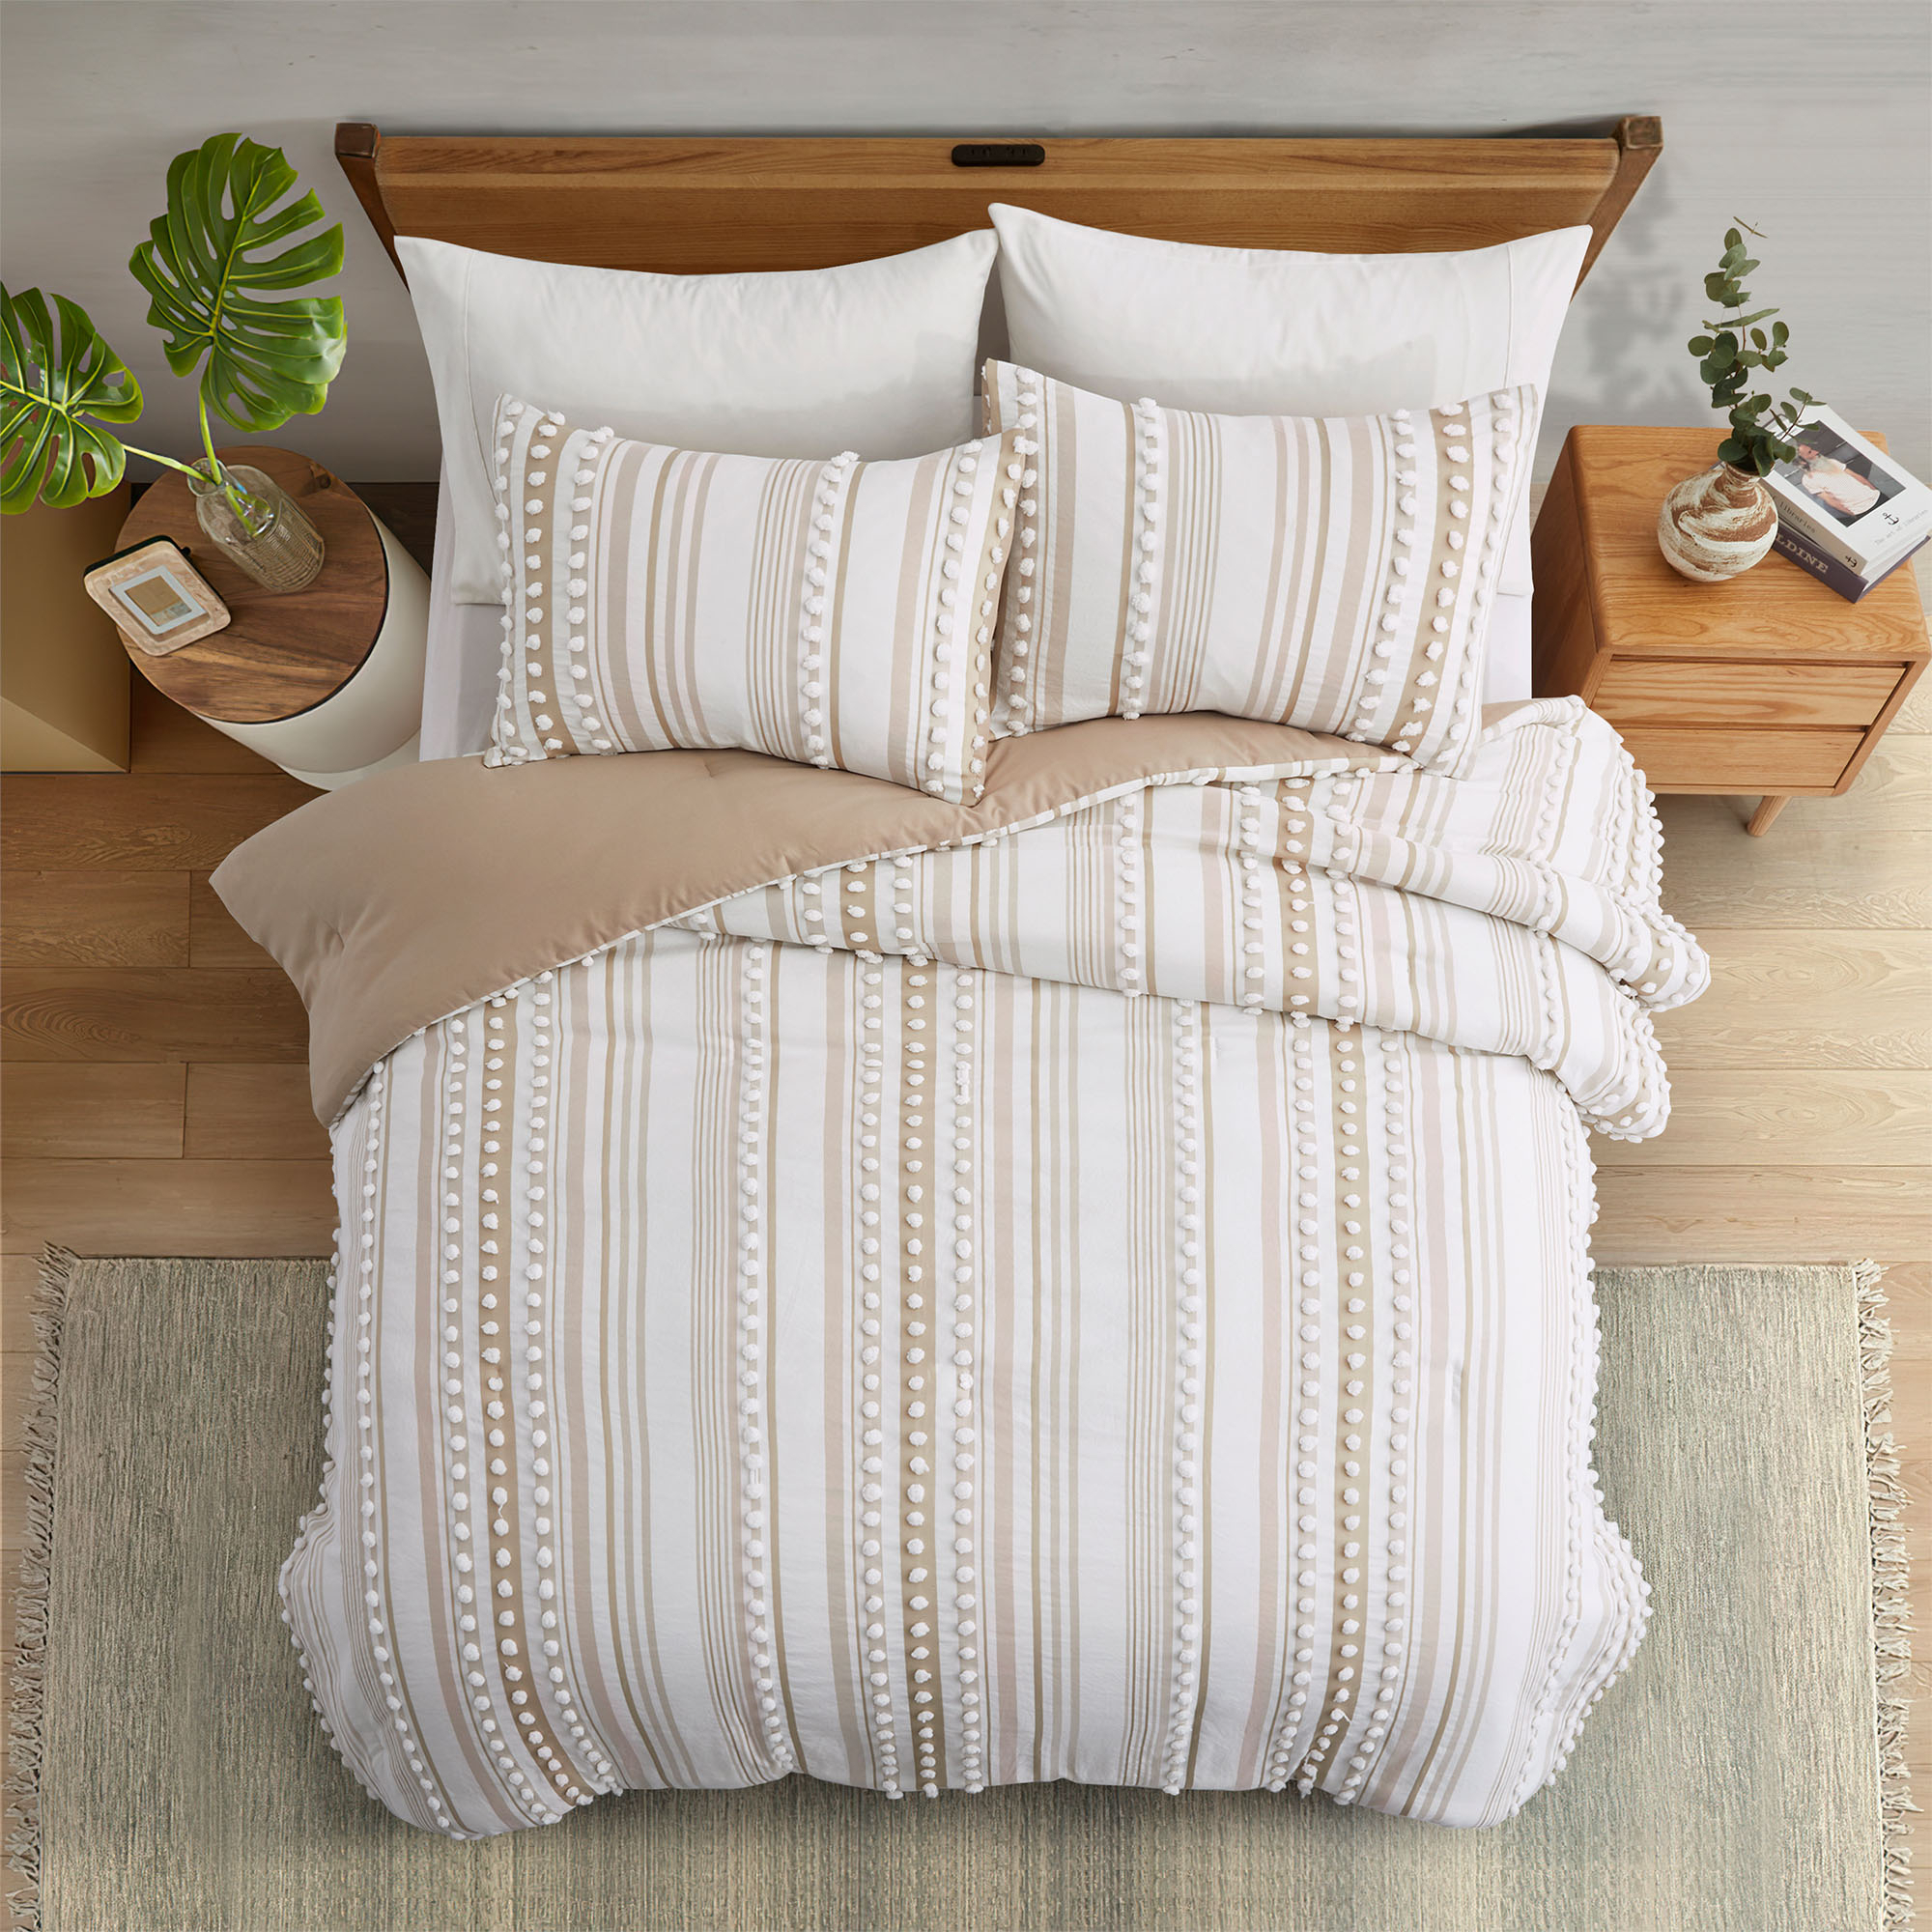 Boho Tufted All Season Bedding Sets Pom Pom Comforter Soft Jacquard Comforter With Pillow Case - King Size